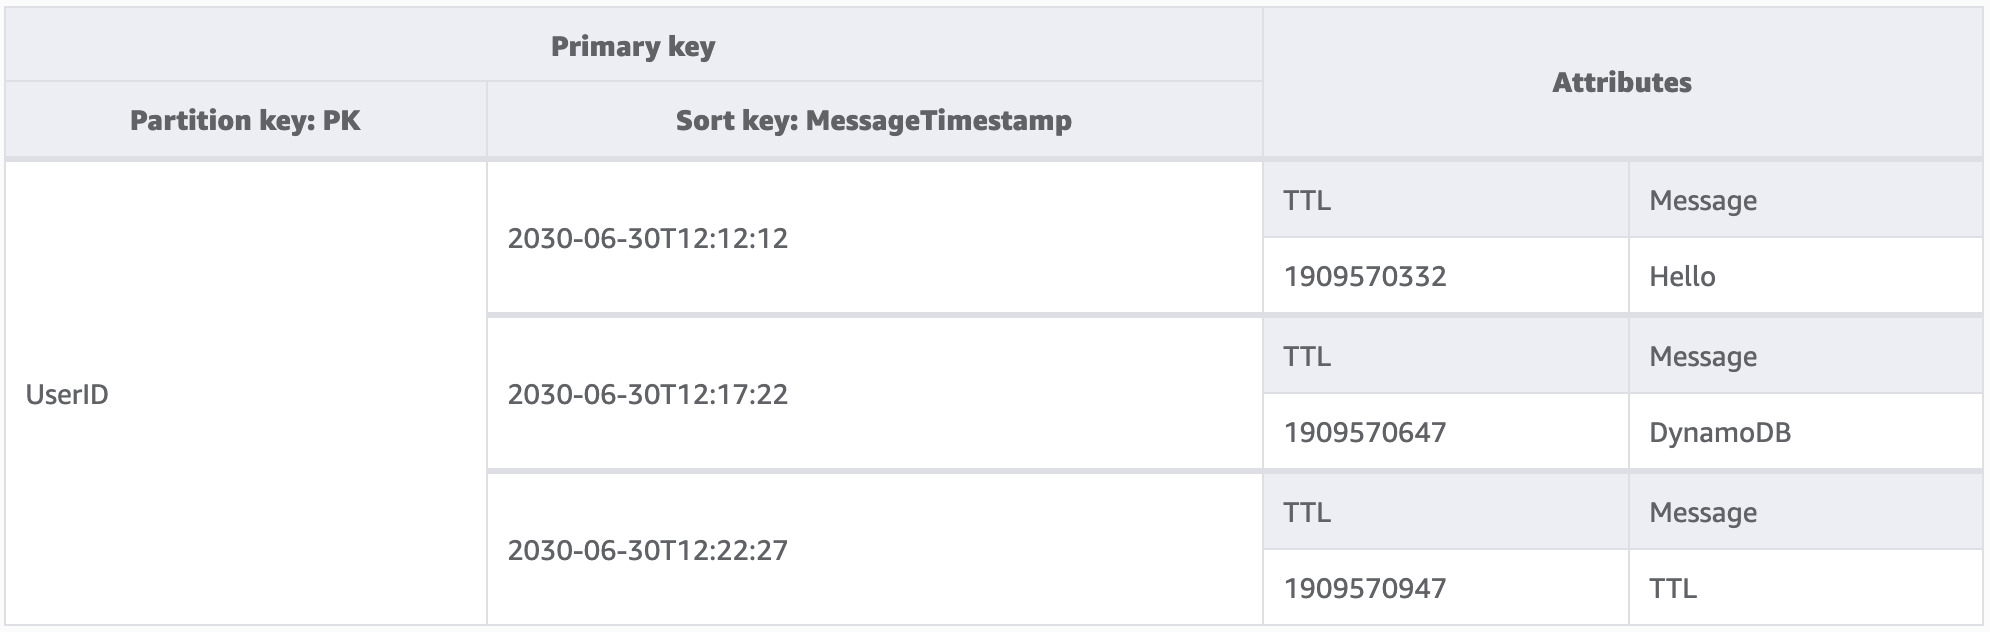 TTL(Time To Live) 속성이 있는 사용자 메시지가 포함된 테이블을 보여 주는 이미지